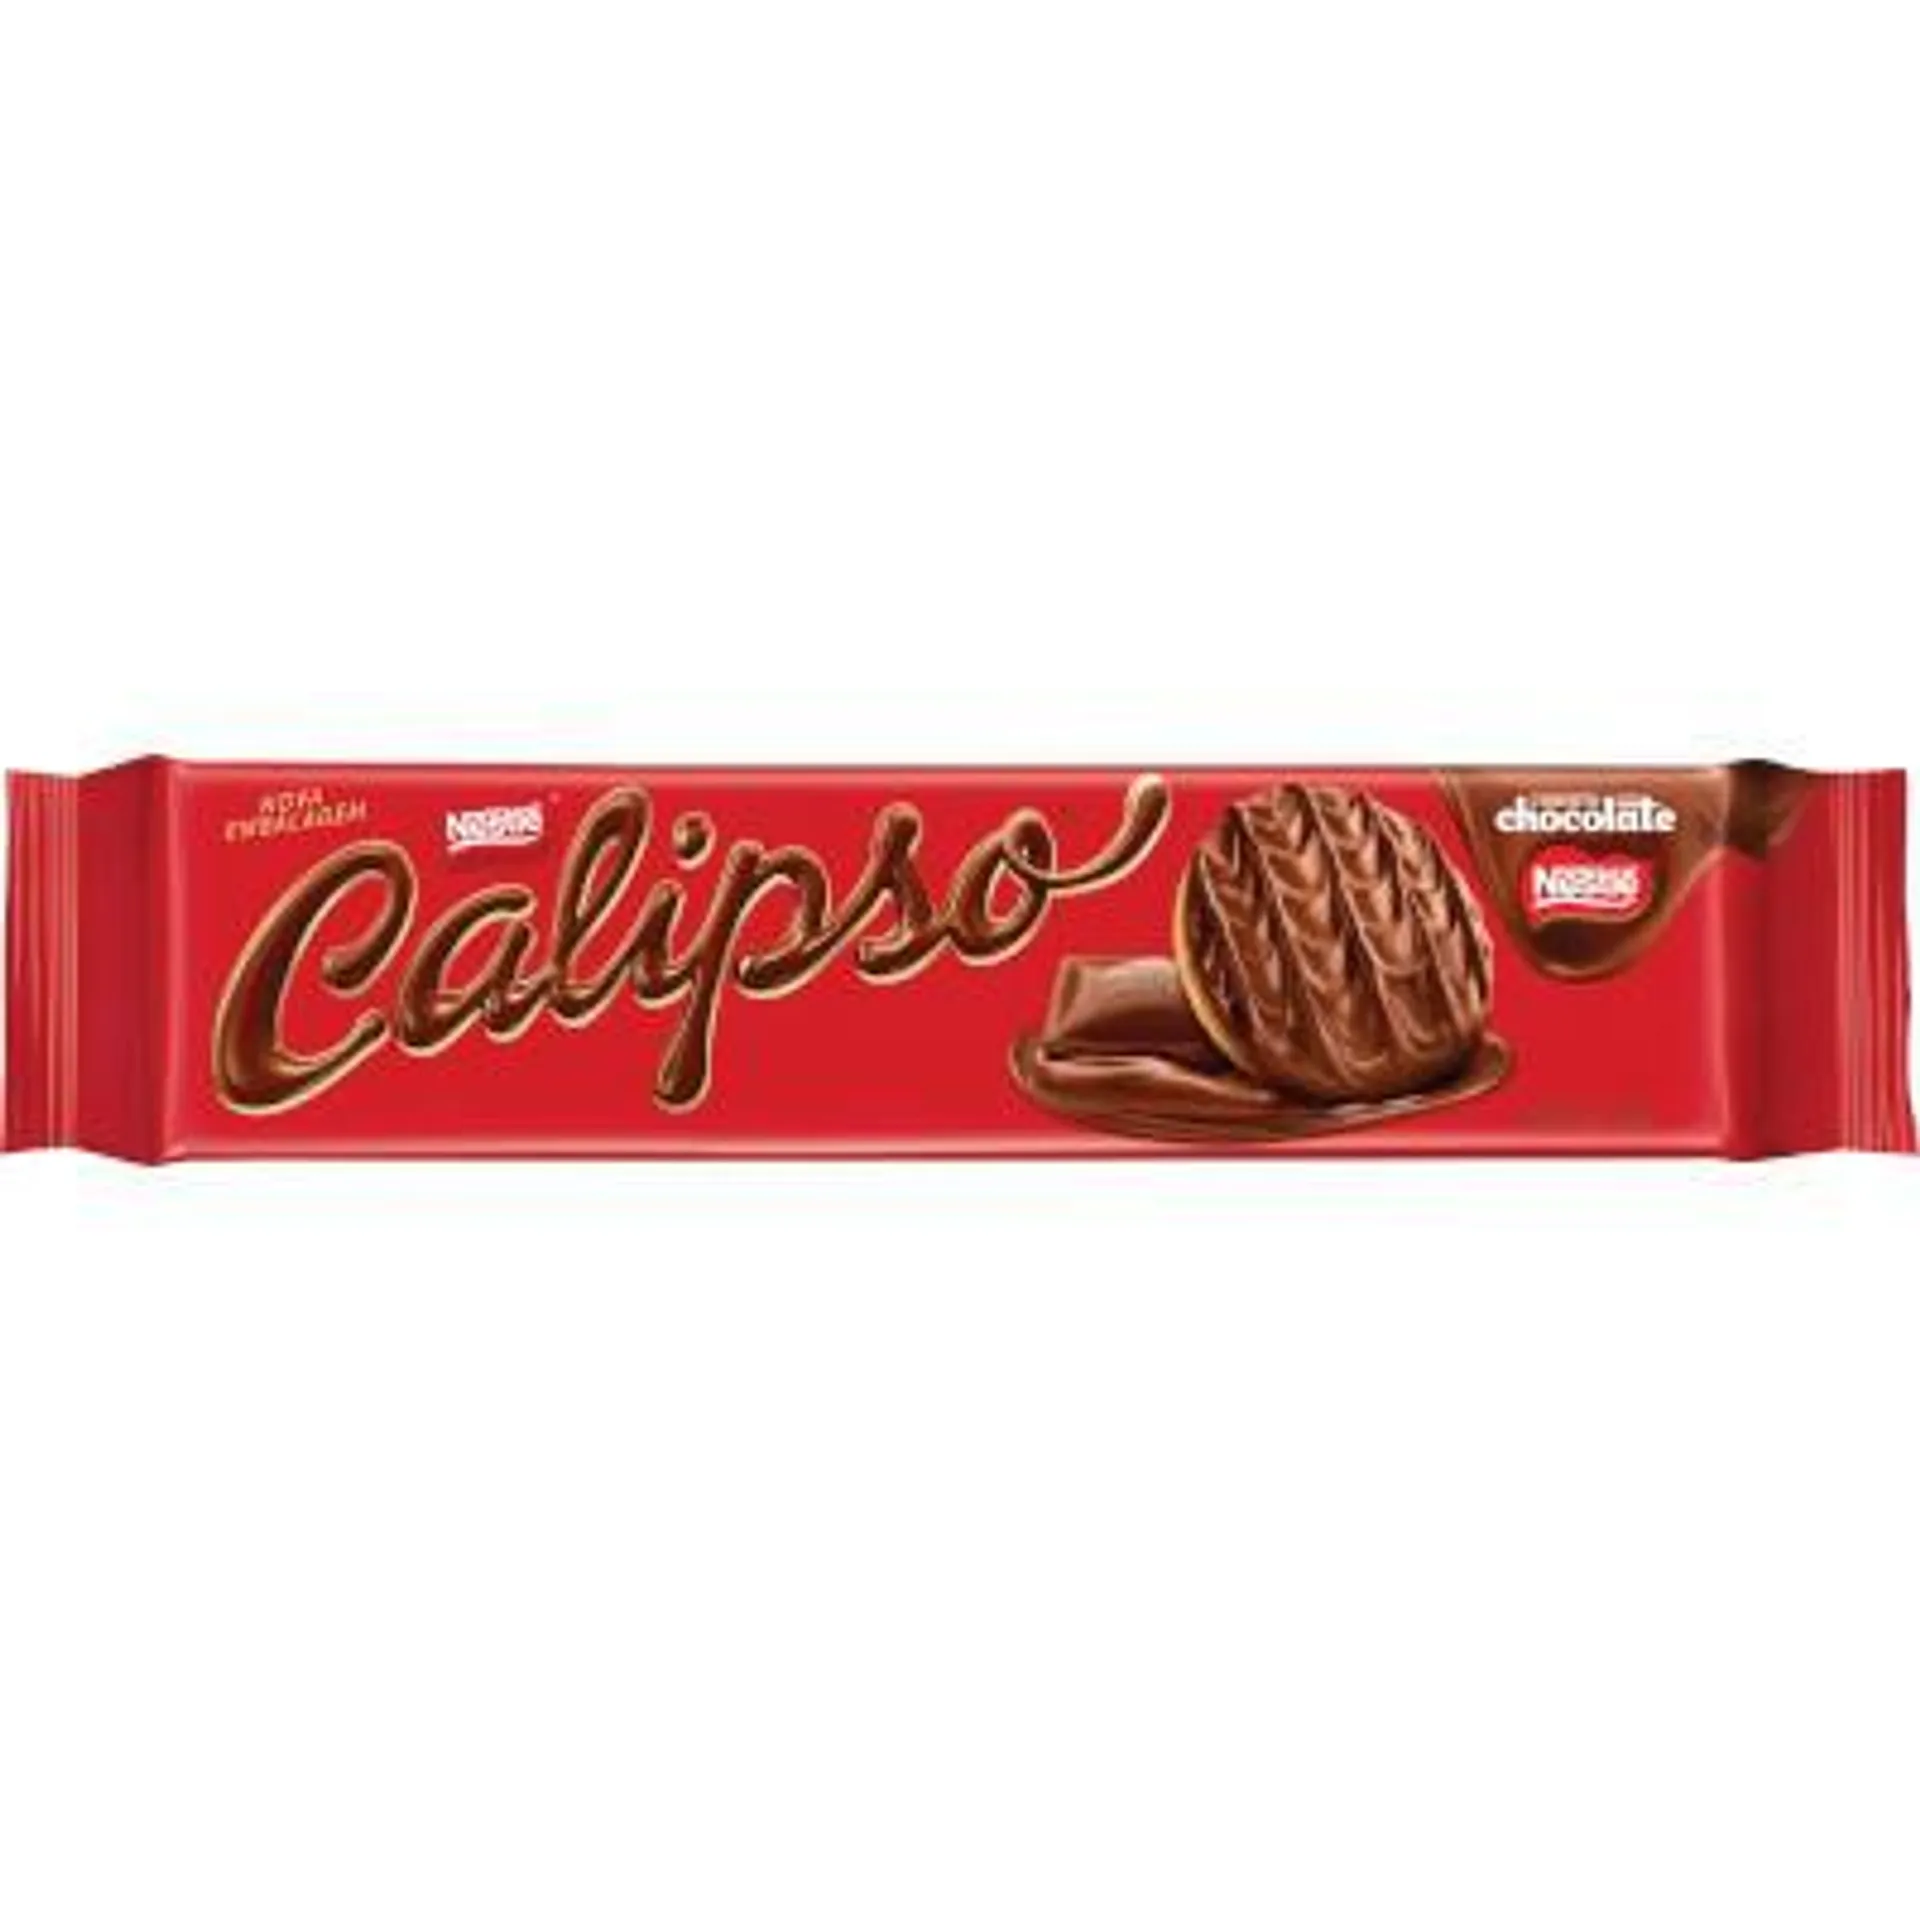 Biscoito Doce Chocolate pacote 130g - Nestlé/Calipso